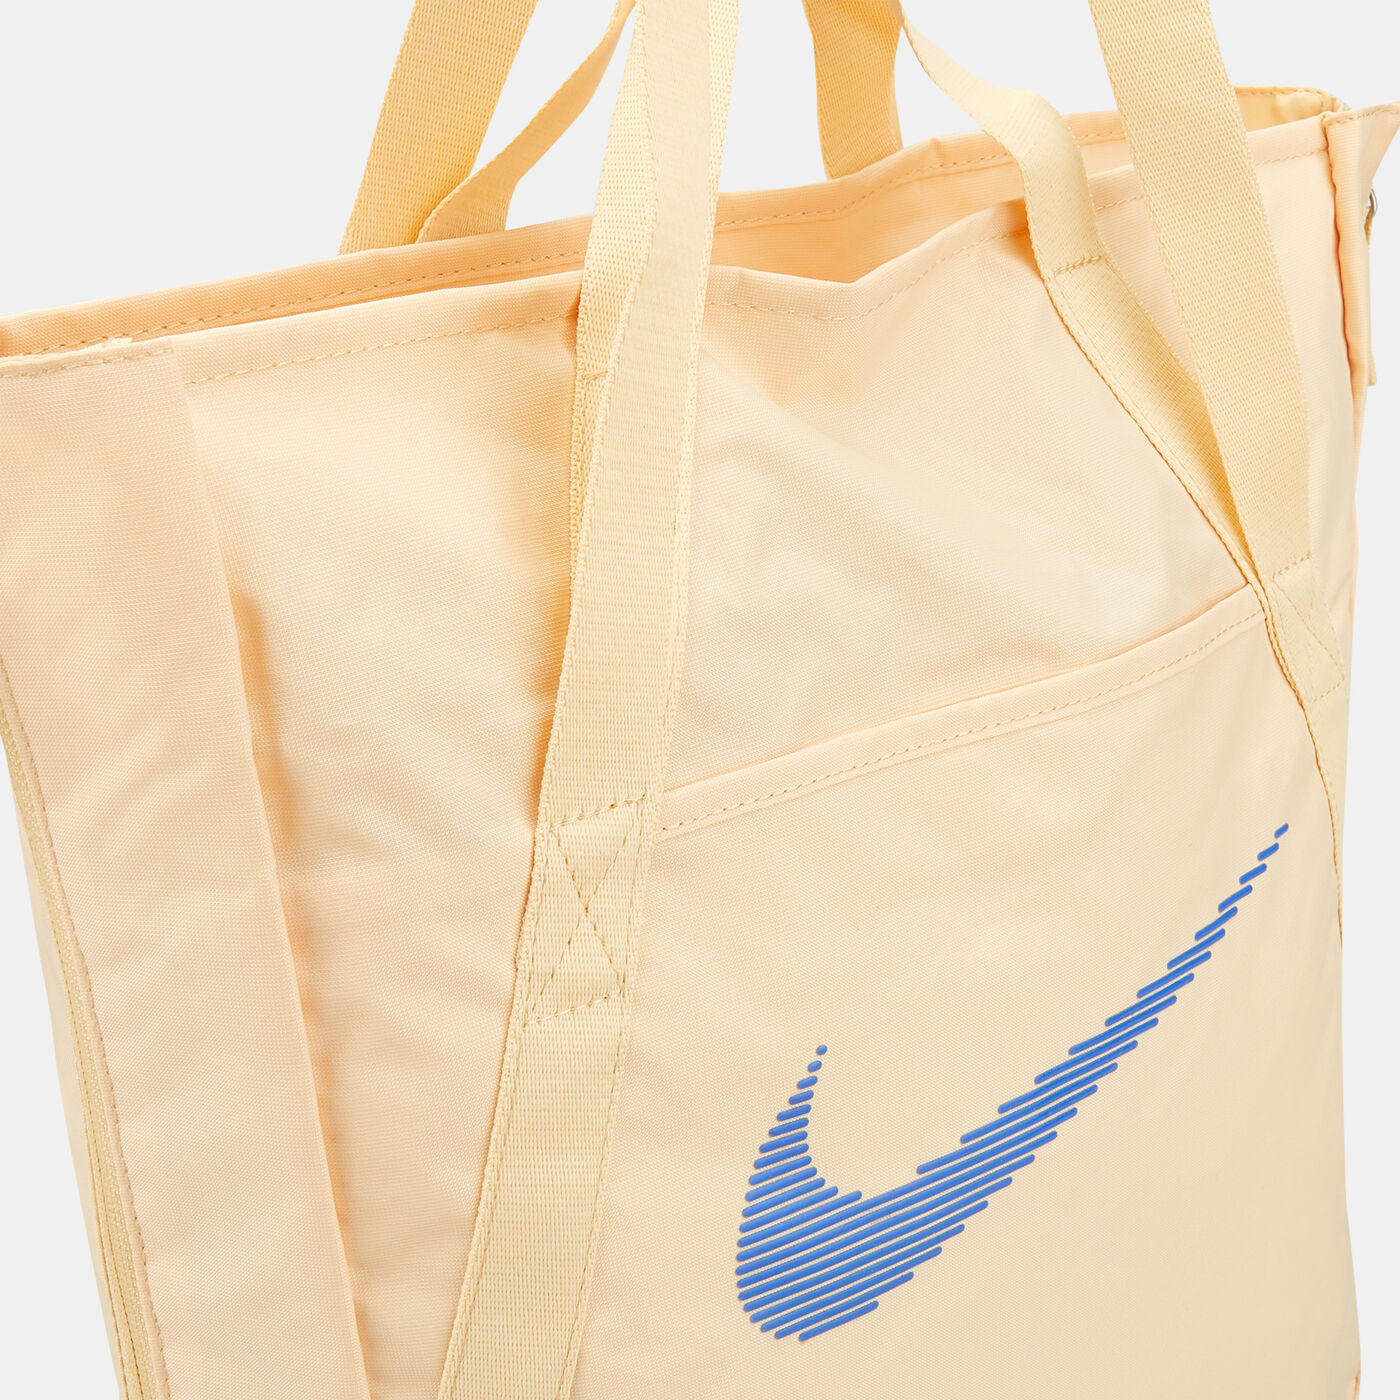 Women's Gym Tote Bag